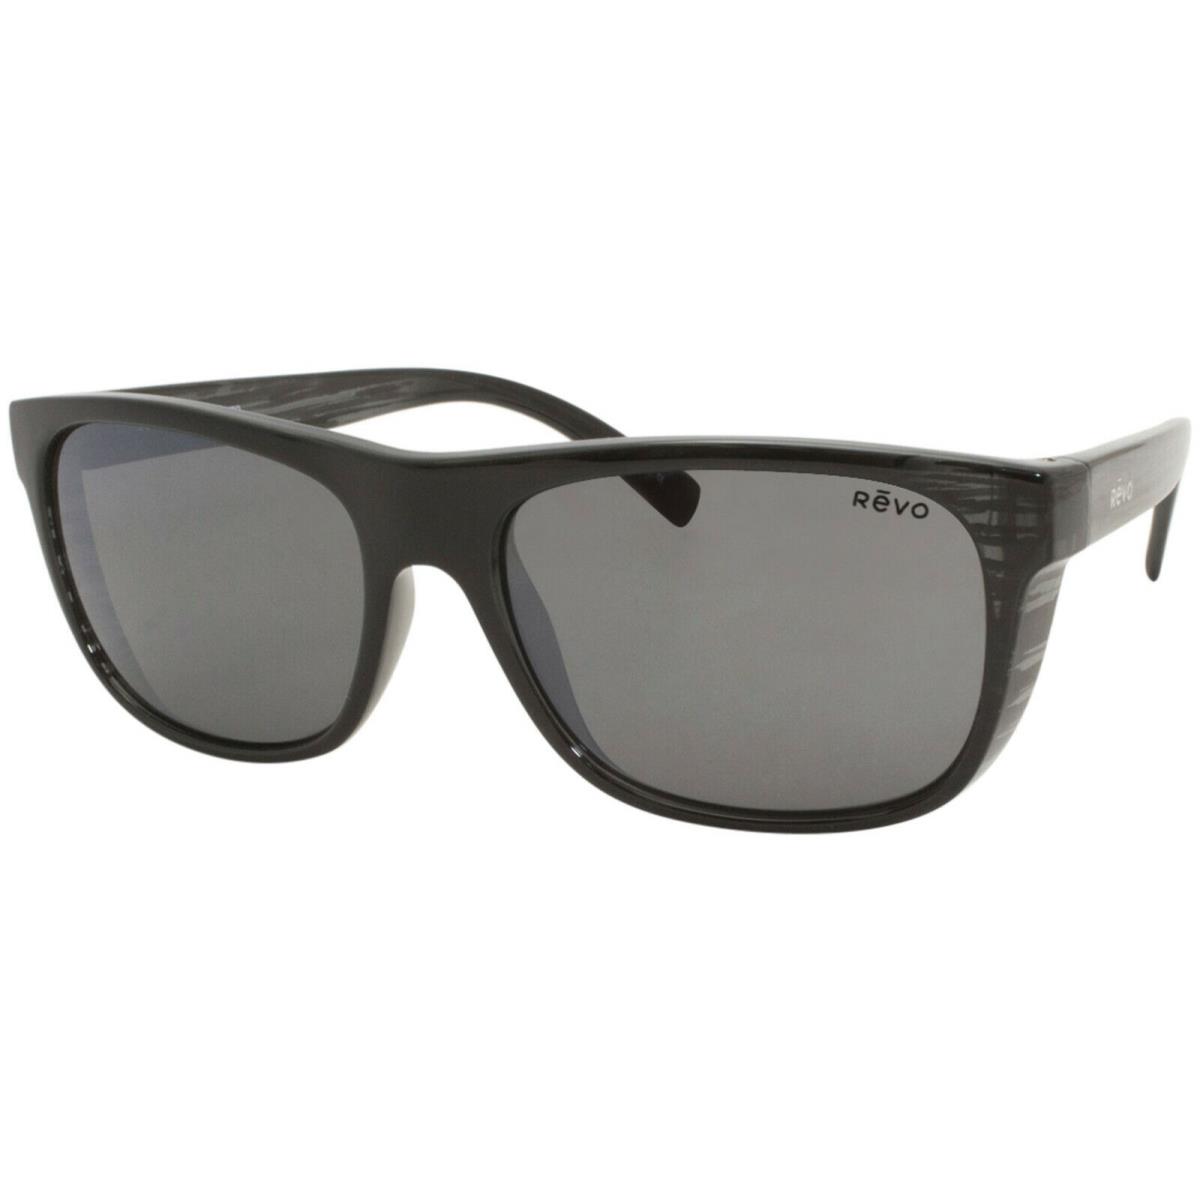 Revo Lukee Polarized Sunglasses - RE 1020 01GY/BlackWoodgrain/Graphite